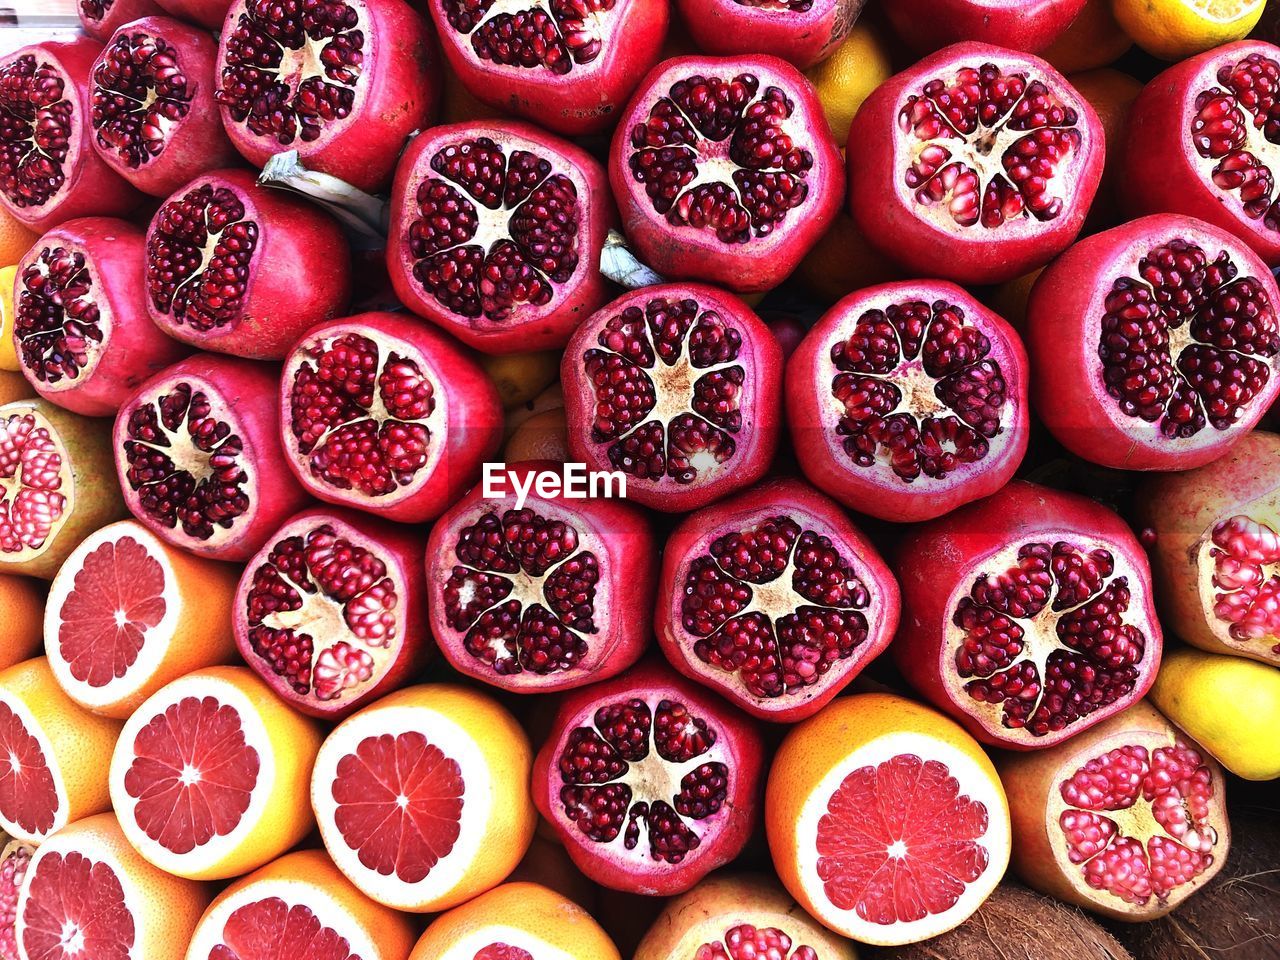 Pomegranate orange lemon grapefruit fruit juice red yellow pink